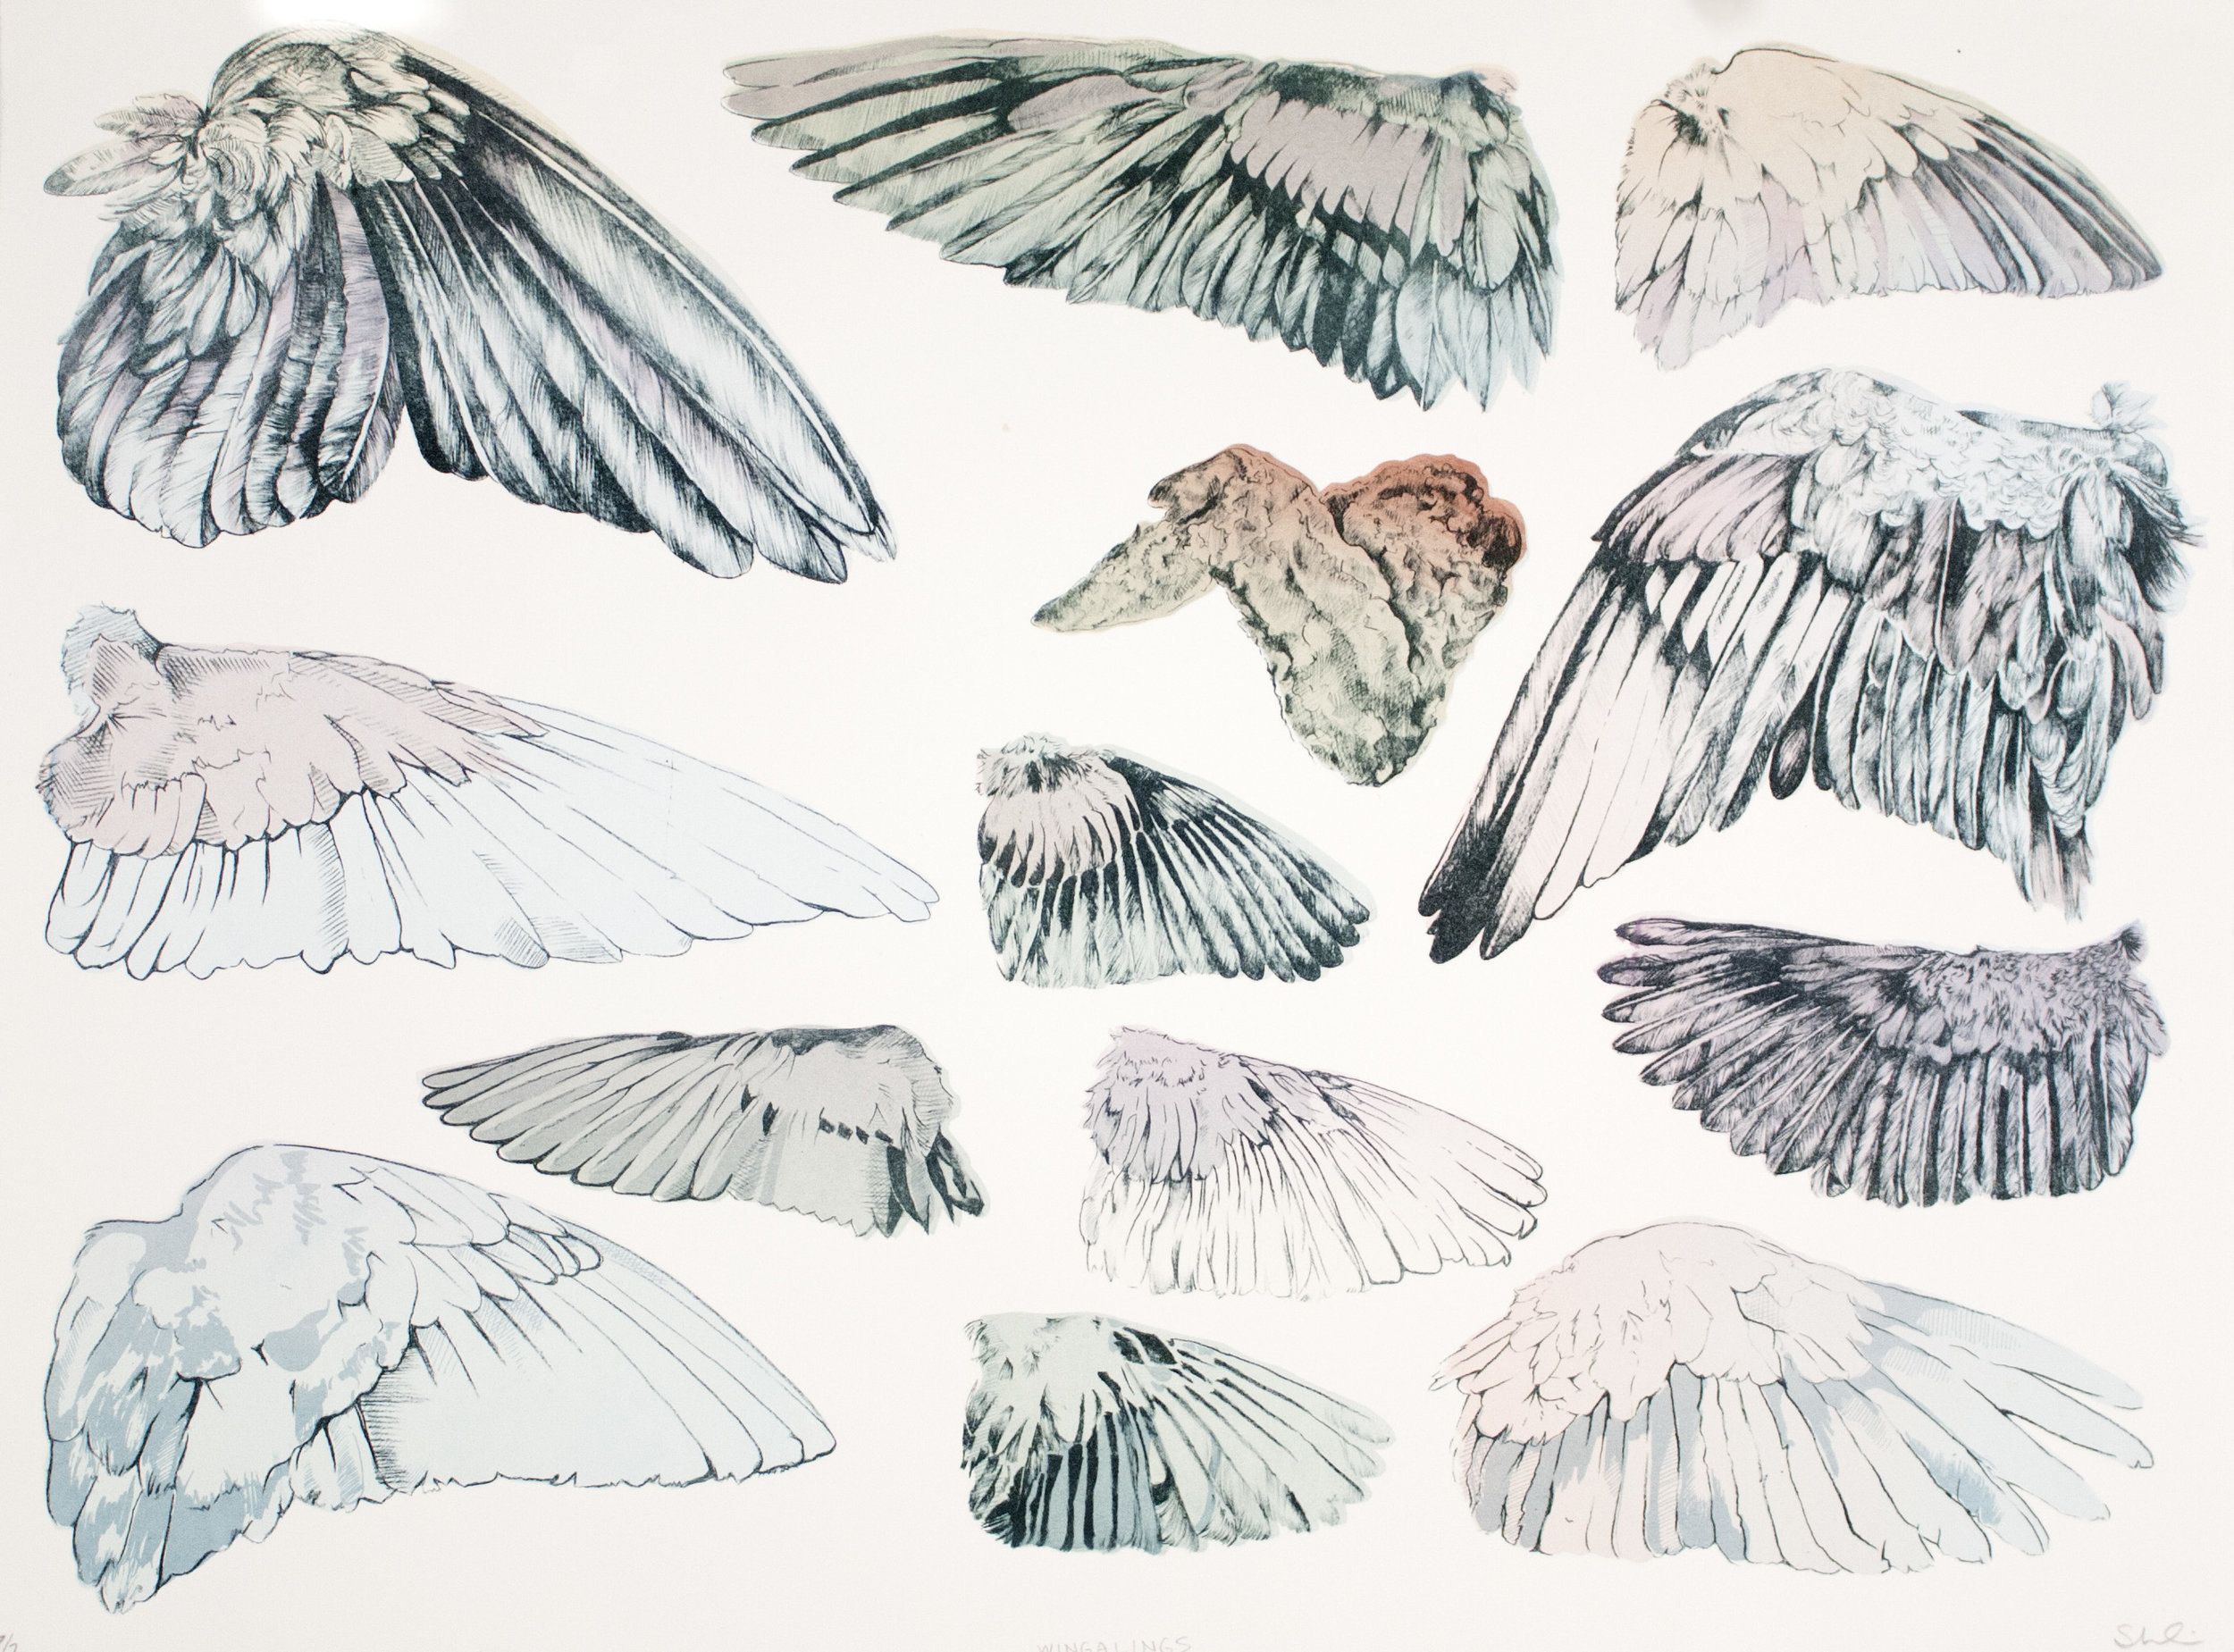  “Wingalings” Lithography, screenprint 18”x24” 